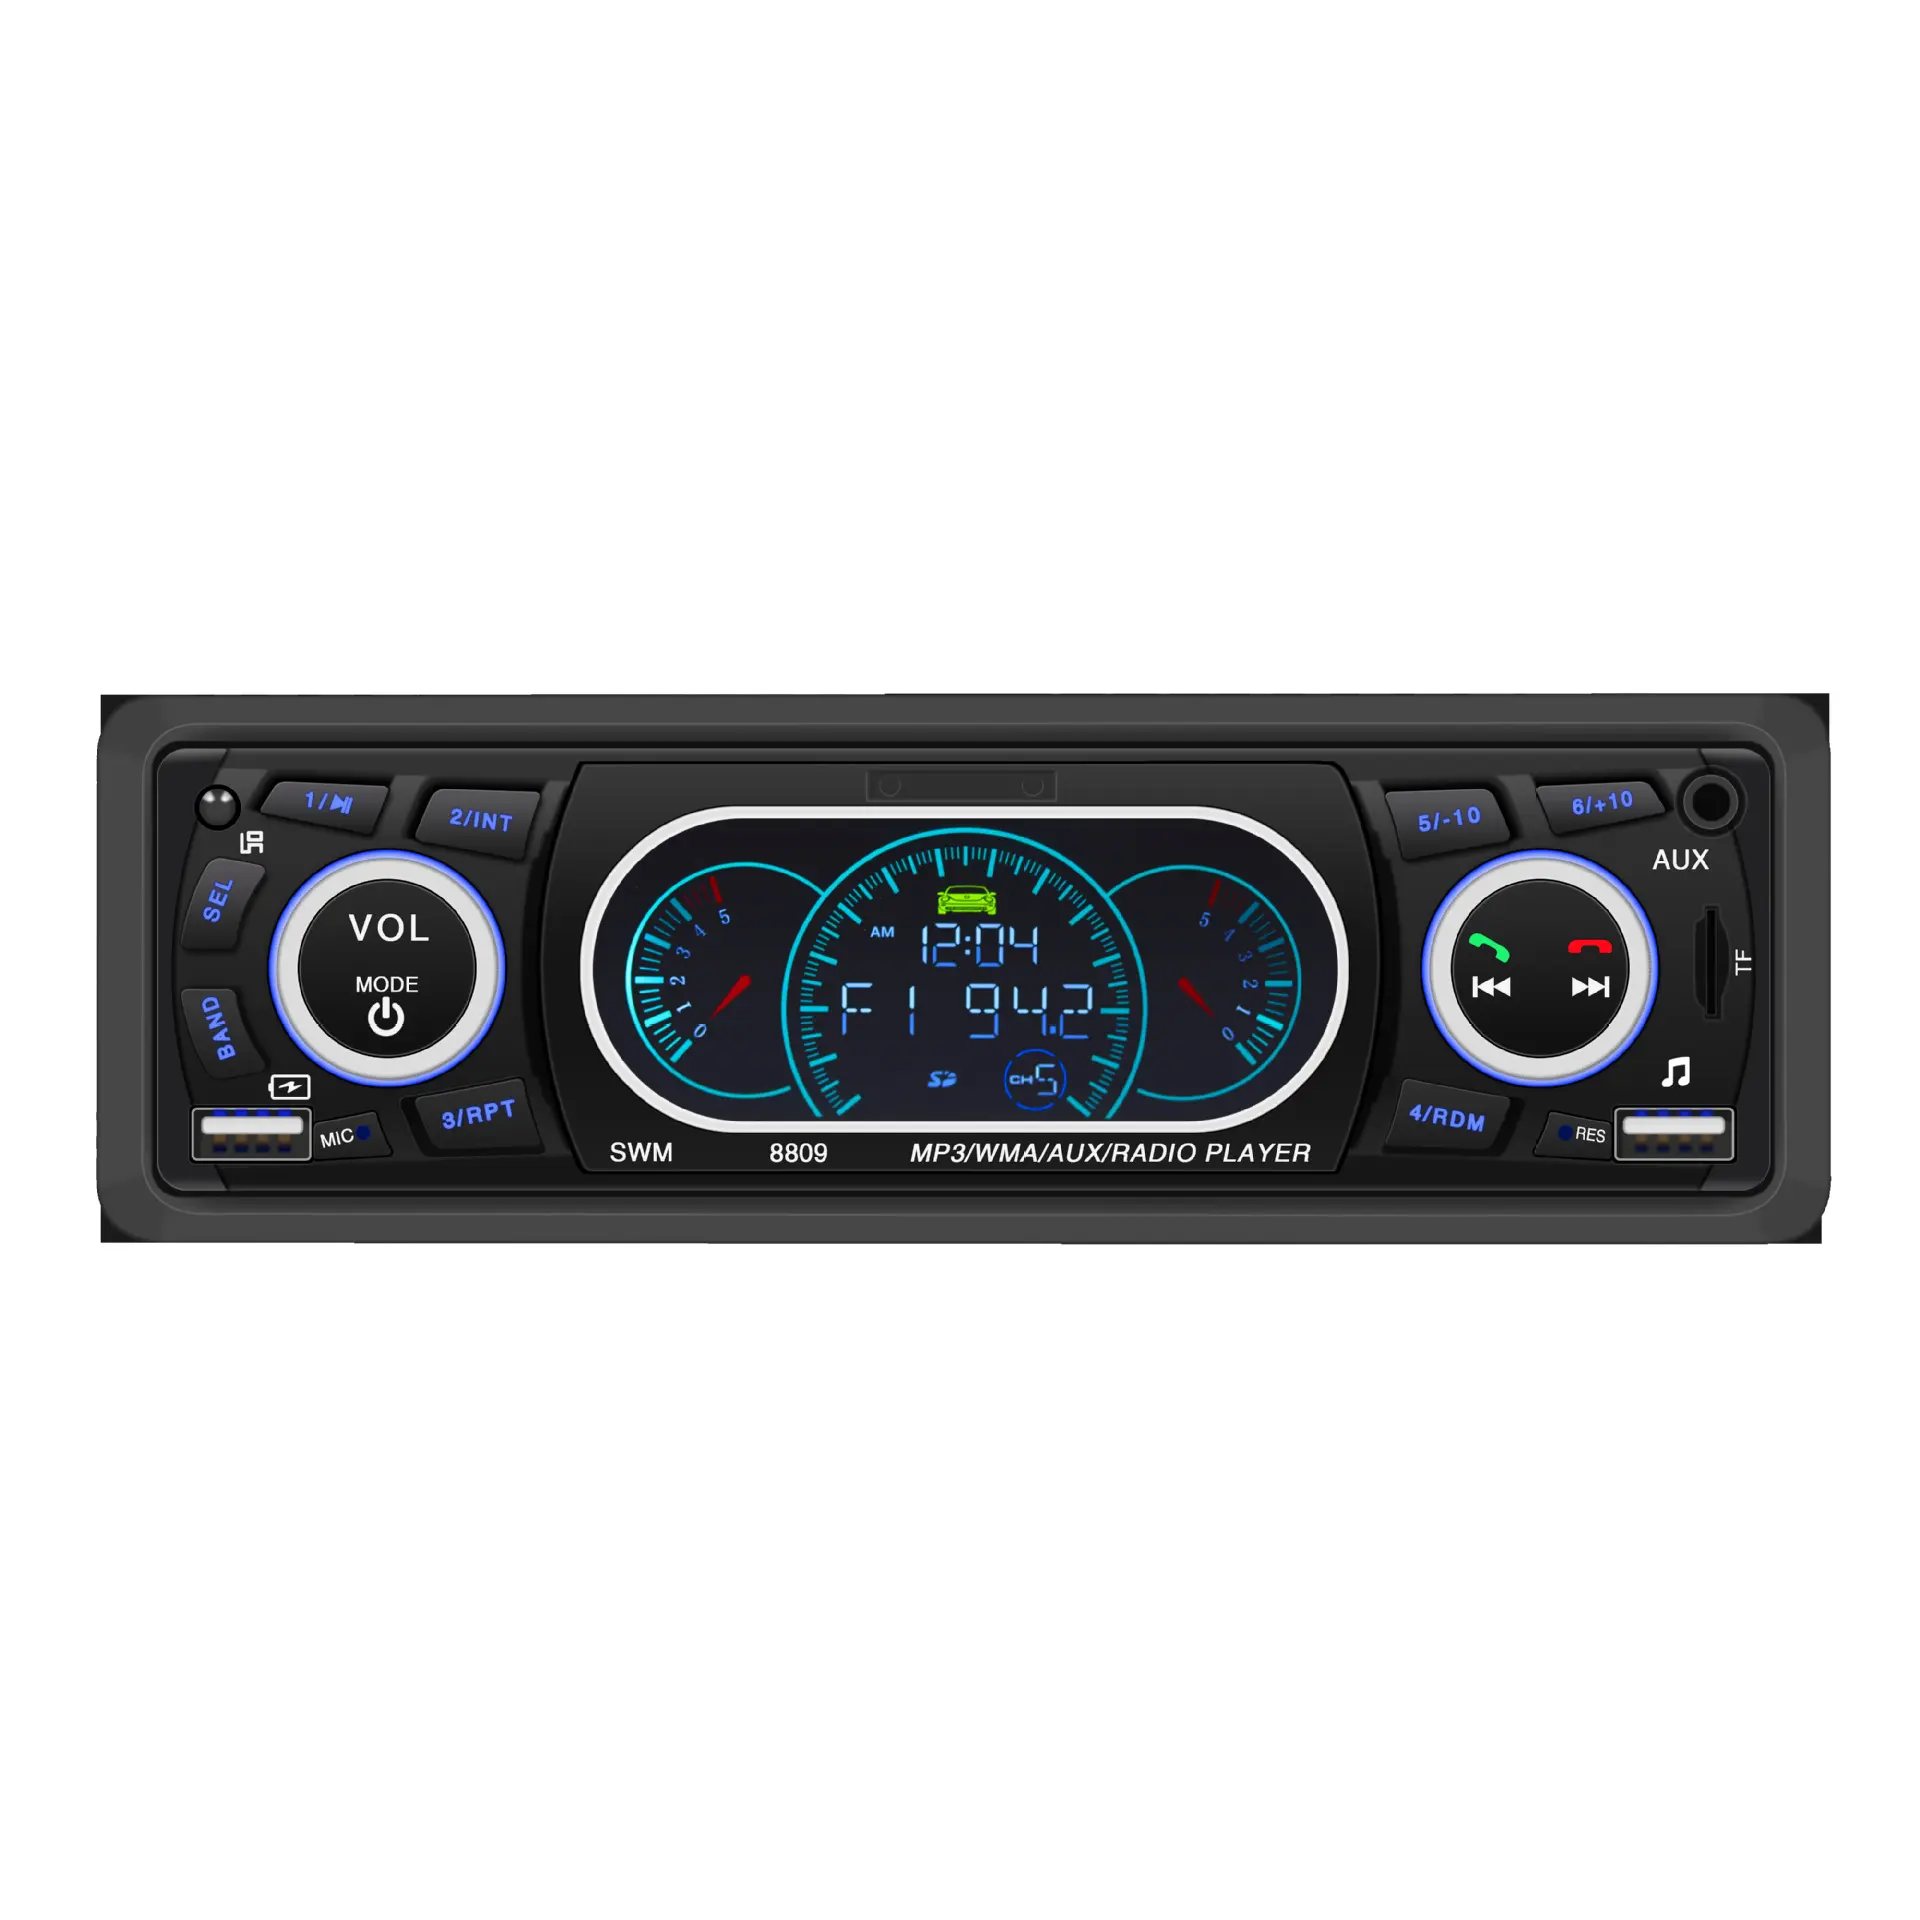 DC12V high power single 1 din car radio mp3 with BT AUX dual USB TF card FM radio car stereo player car audio